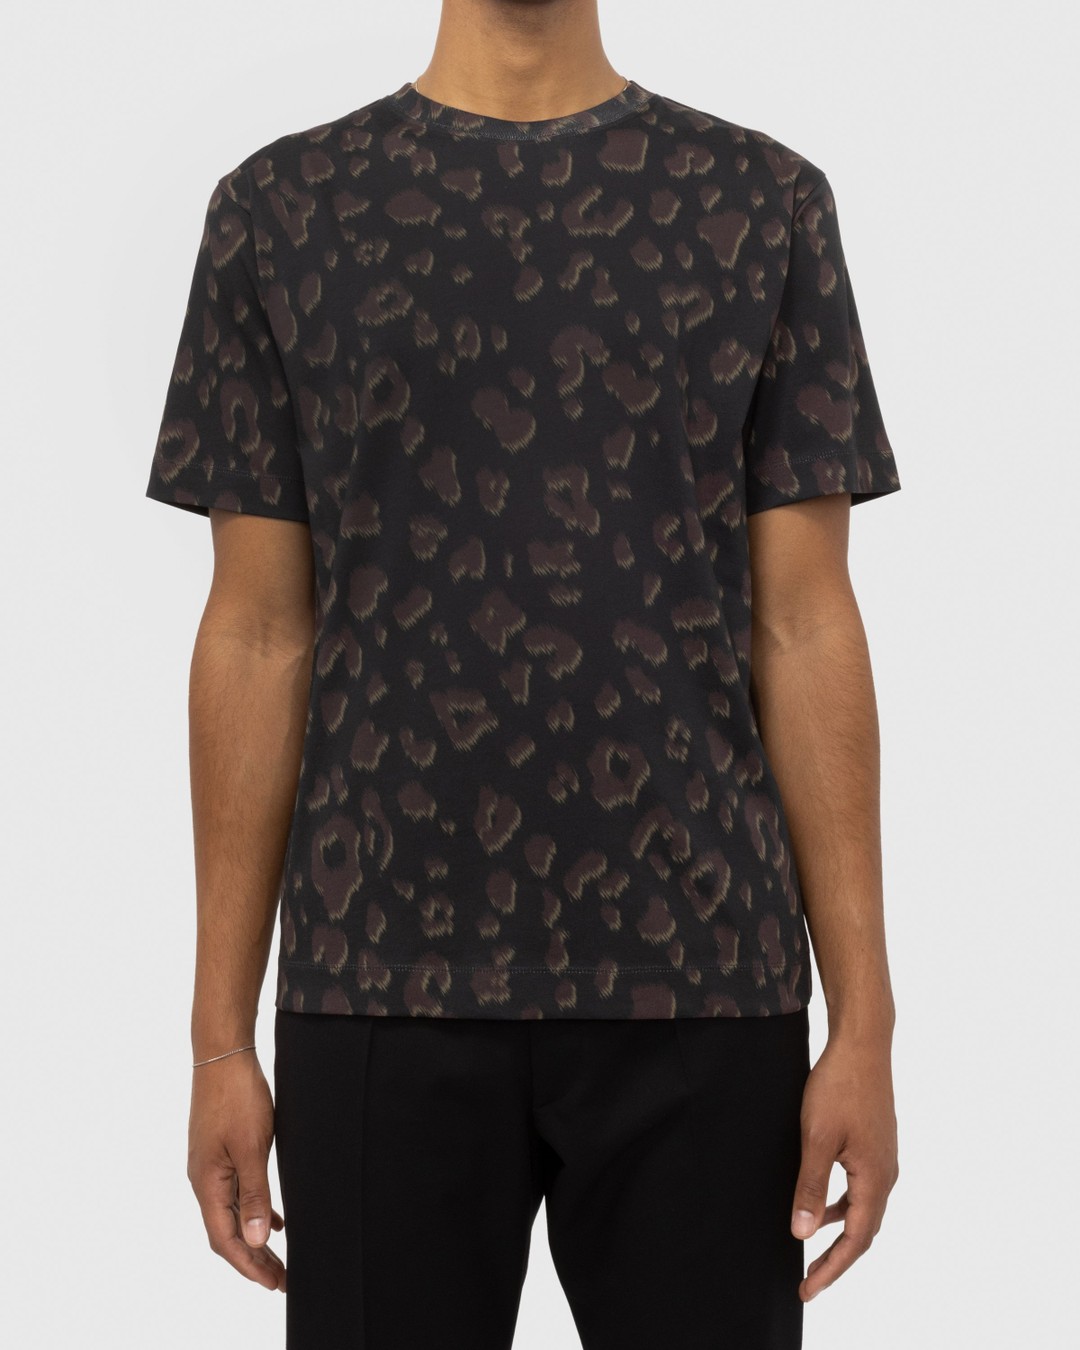 Dries van Noten – Hertz T-Shirt Black - T-Shirts - Black - Image 3